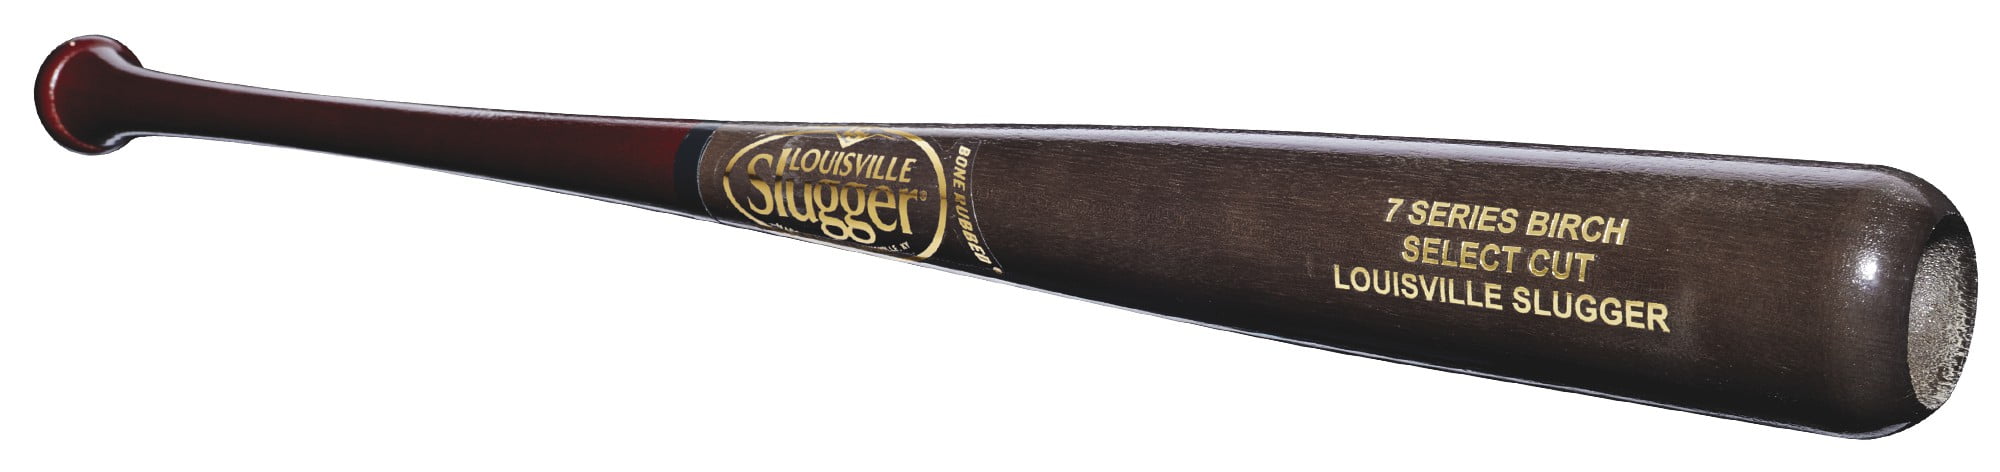 Louisville Slugger Legacy Series 5 Ash M110 Unfinished Baseball Bat 33 inch/30 